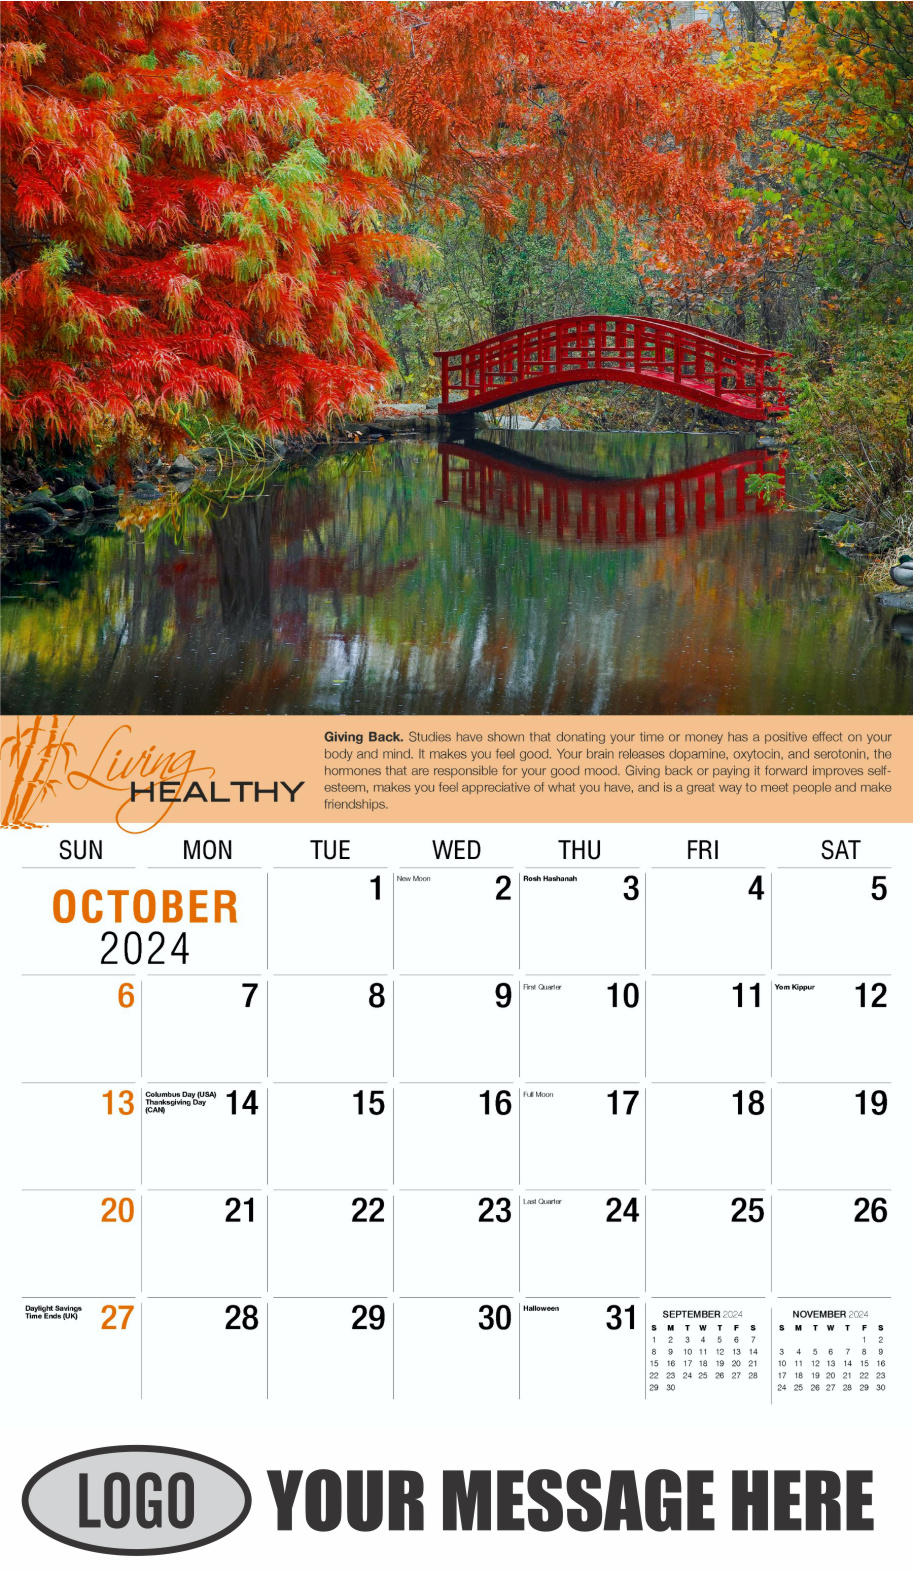 Living Healthy 2024 Business Promotional Calendar - October